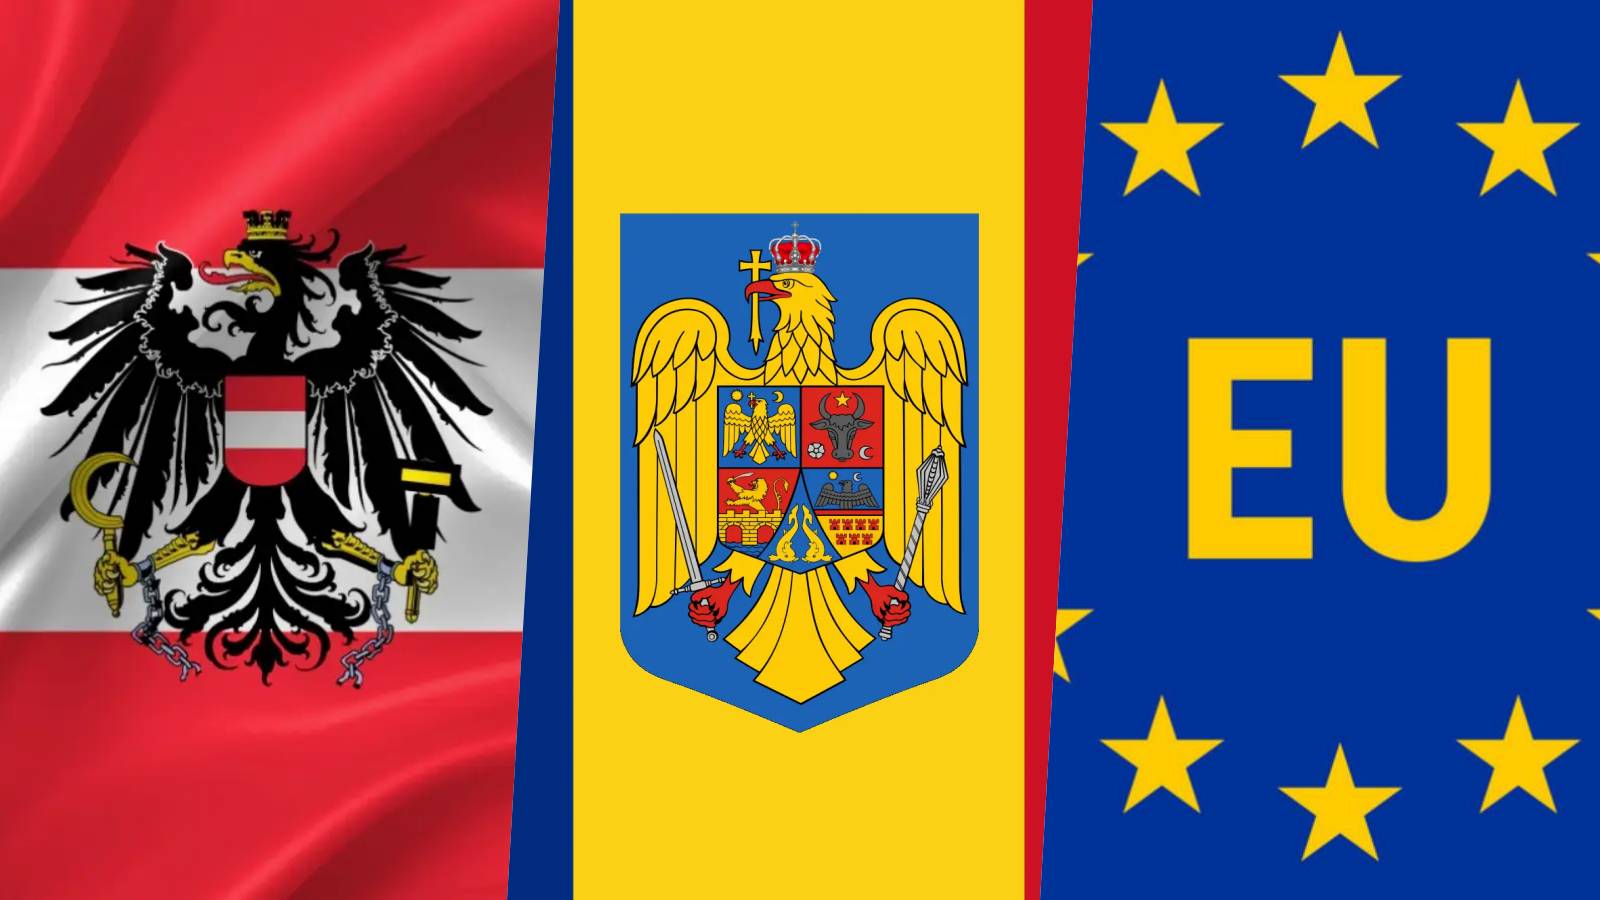 Austria Karl Nehammer Vizat Masuri IMPORTANTE UE Veto Aderarii Romaniei Schengen